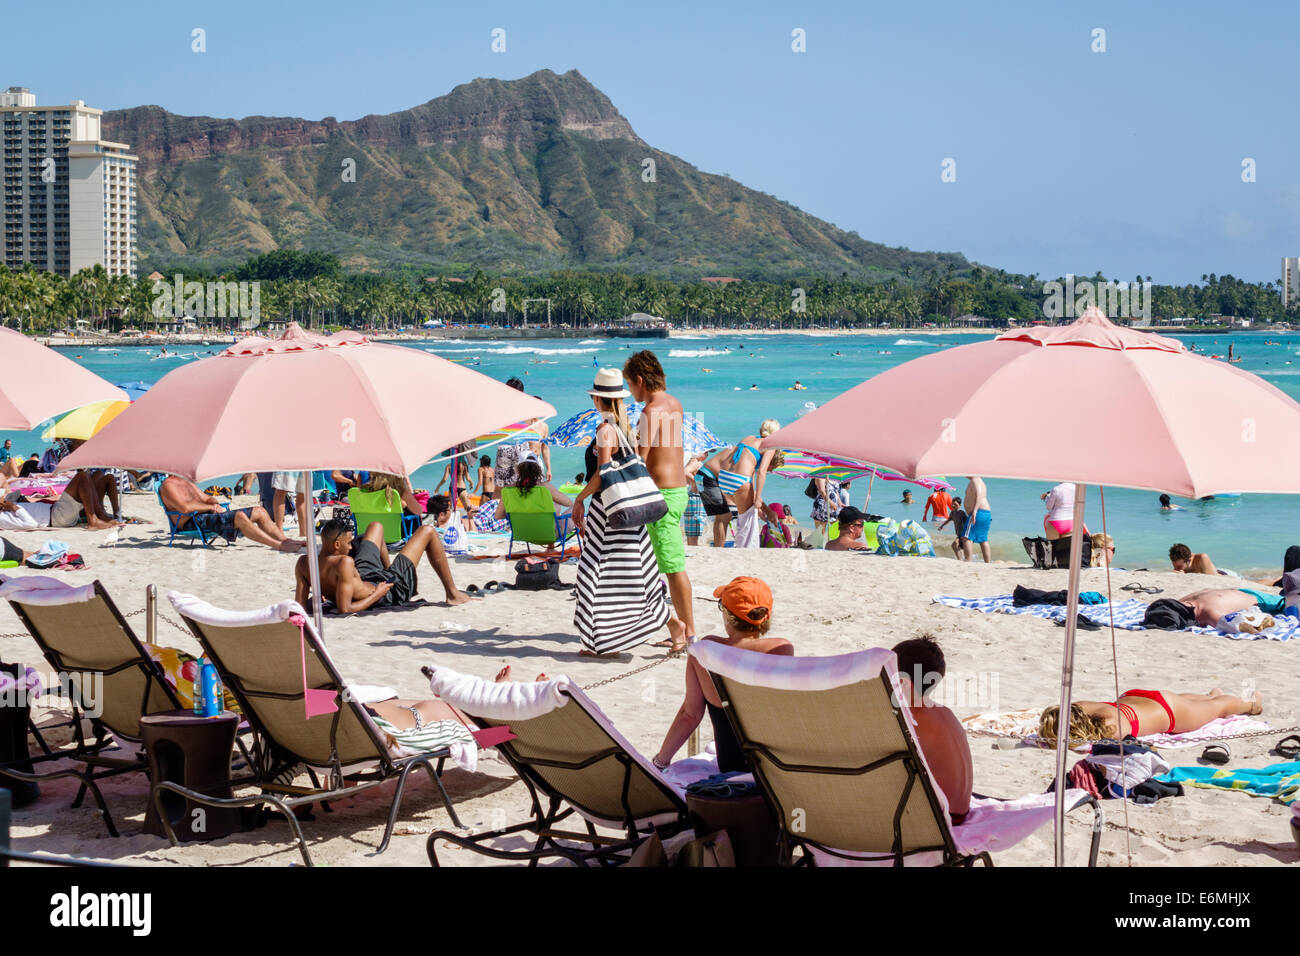 Honolulu Waikiki Beach Hawaii,Hawaiian,Oahu,Océan Pacifique,Royal Hawaiian,hôtel,rose,parasols,Diamond Head Crater,volcan éteint,montagne,bains de soleil, Banque D'Images